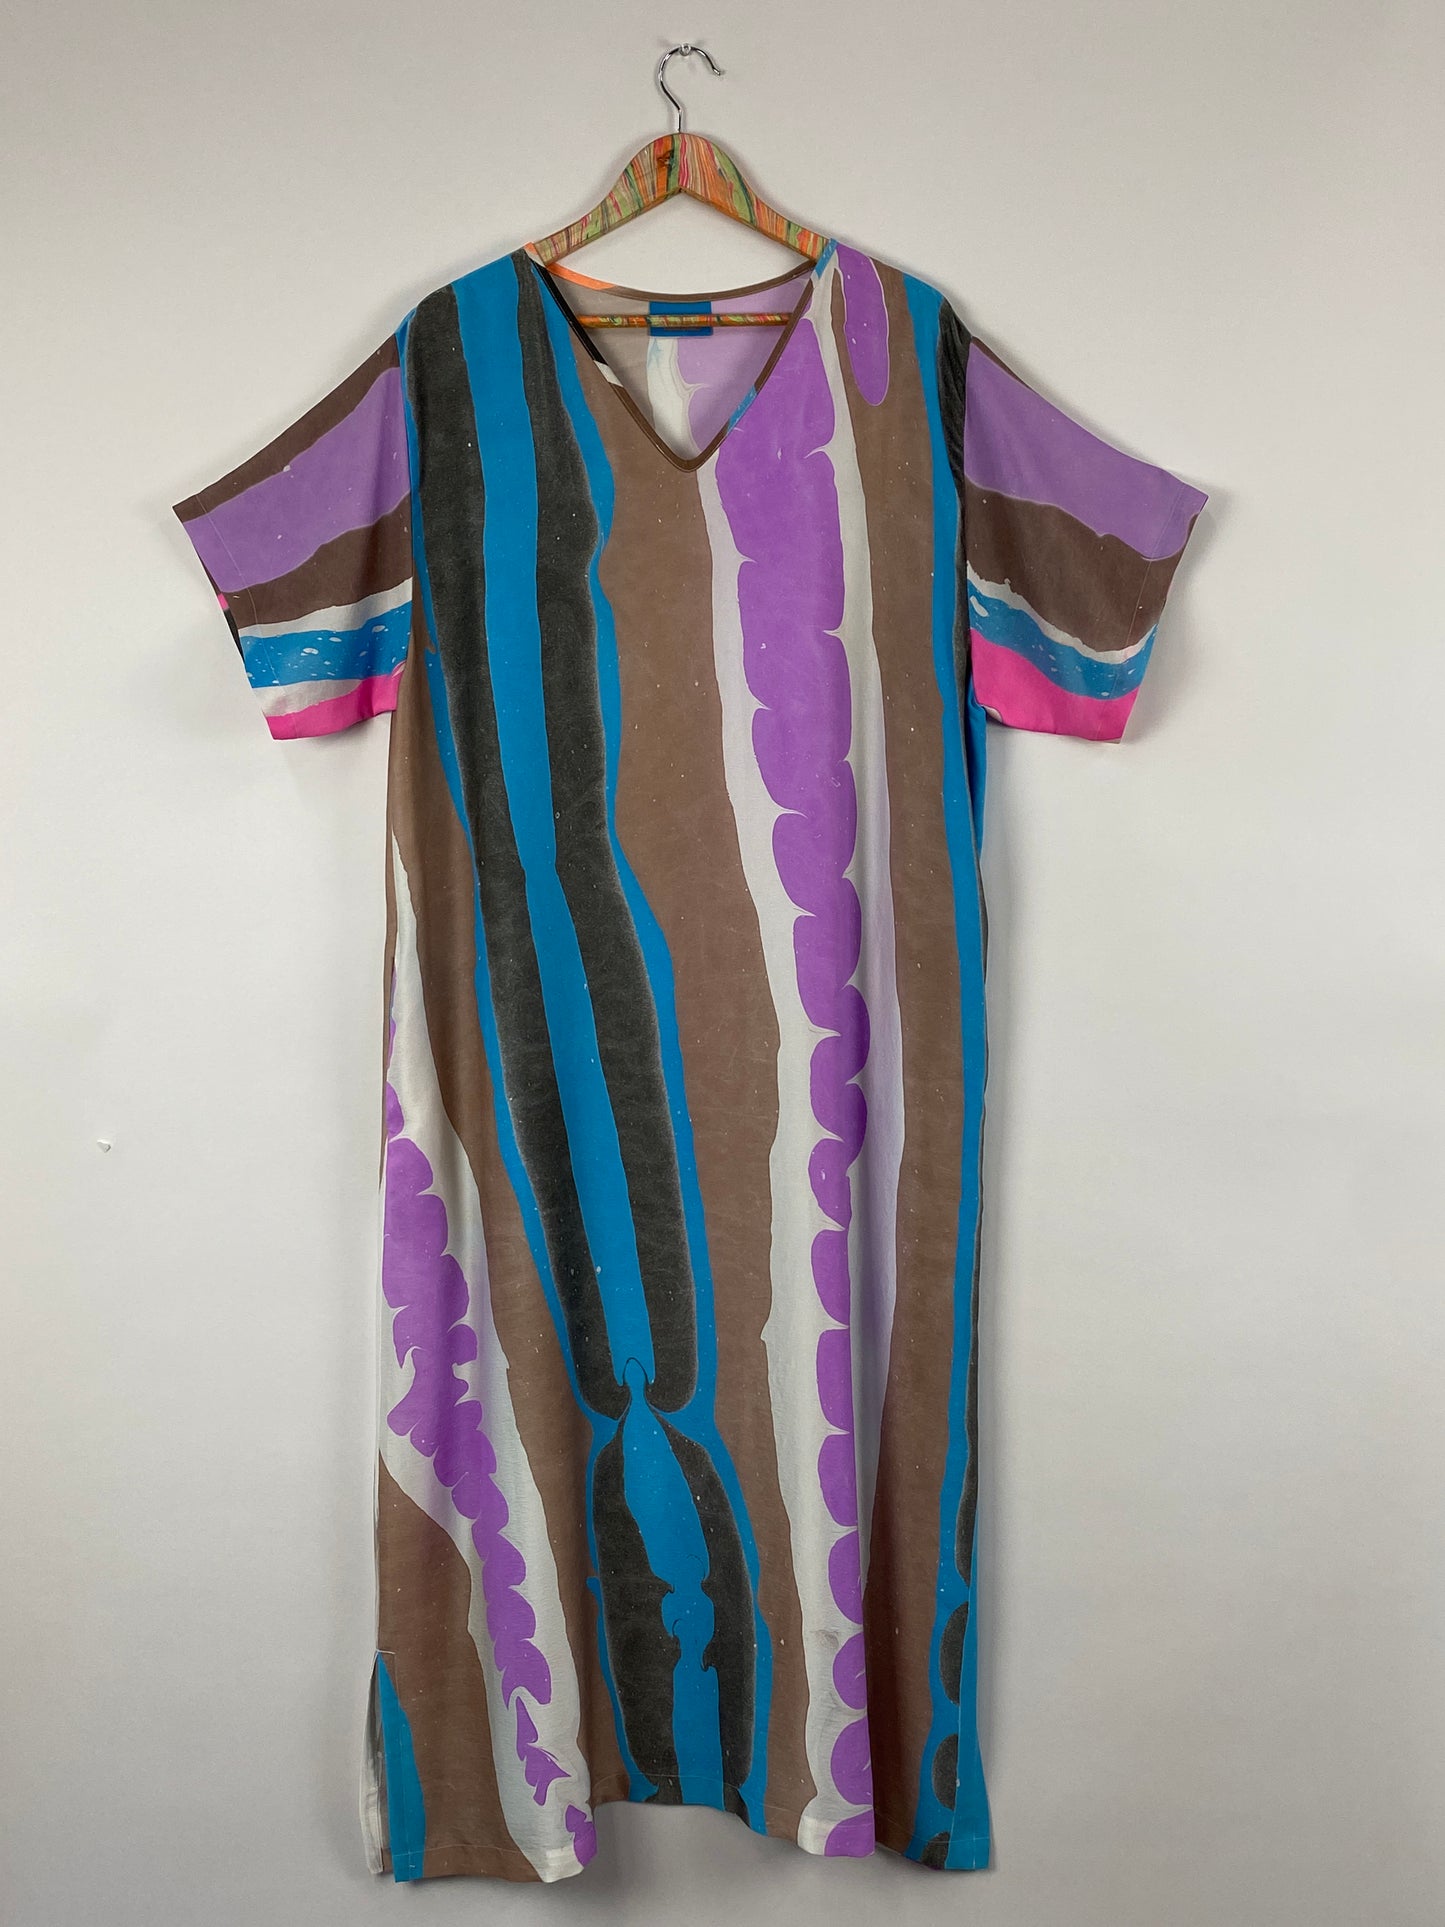 L/XL Stripe Dress #3